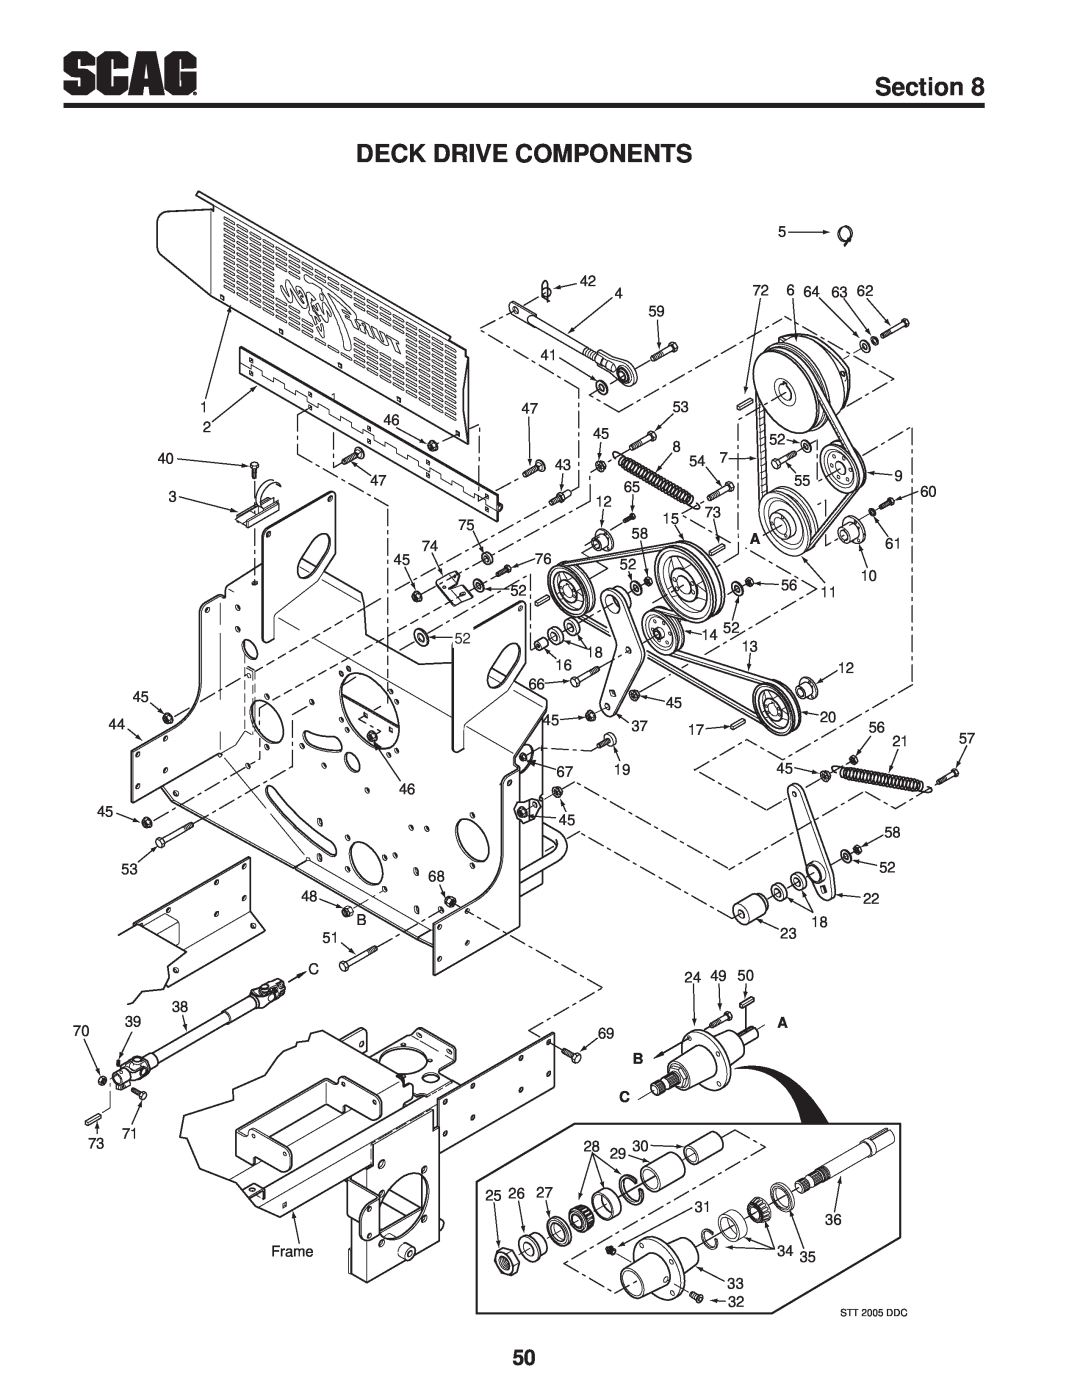 Scag Power Equipment STT61V-31EFI-SS manual Deck Drive Components, Section, Frame, STT 2005 DDC 